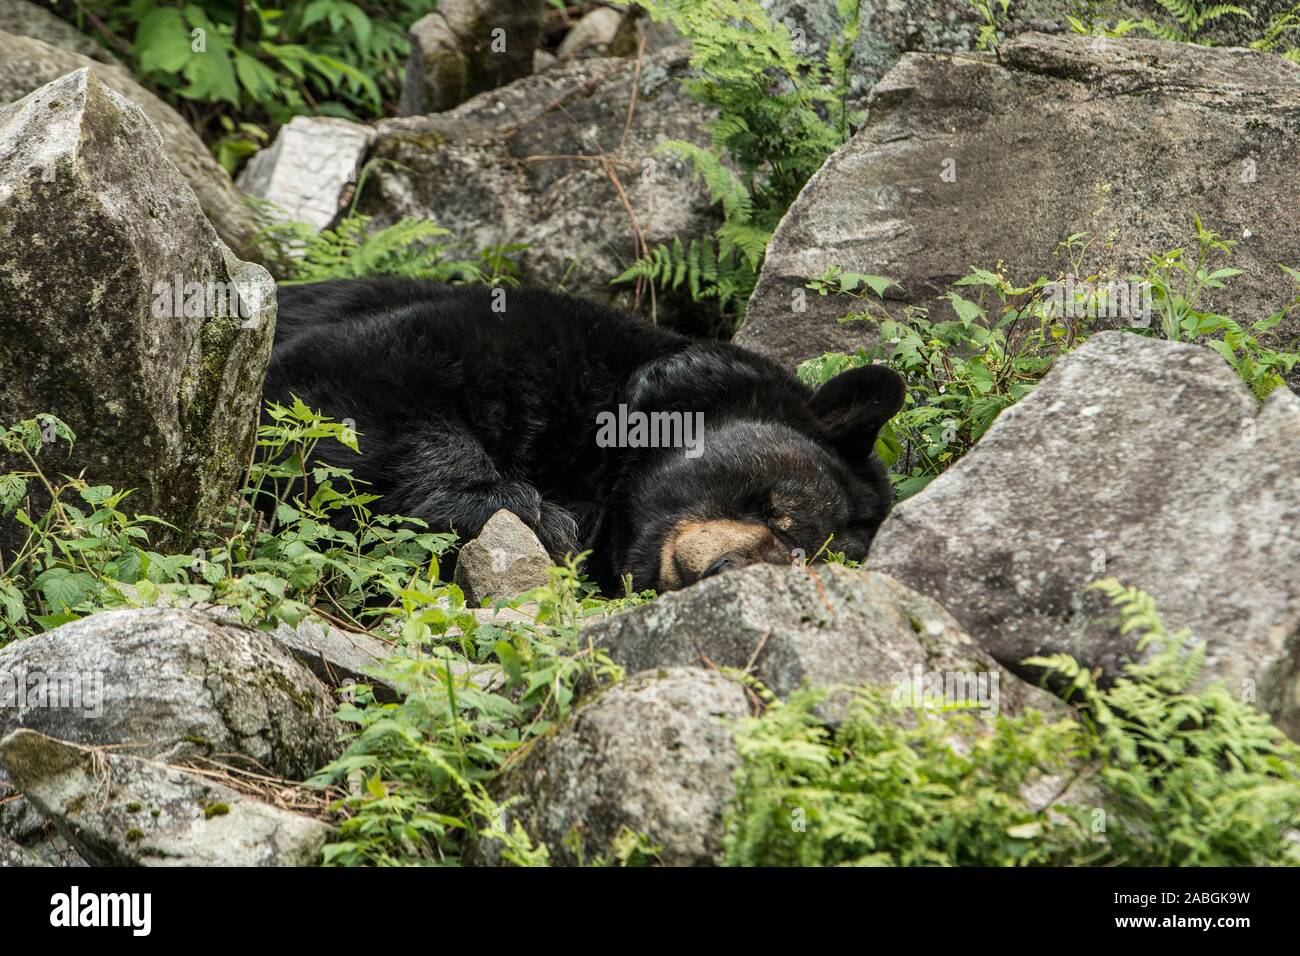 Black bear Sleeping on the ground. Stock Photo